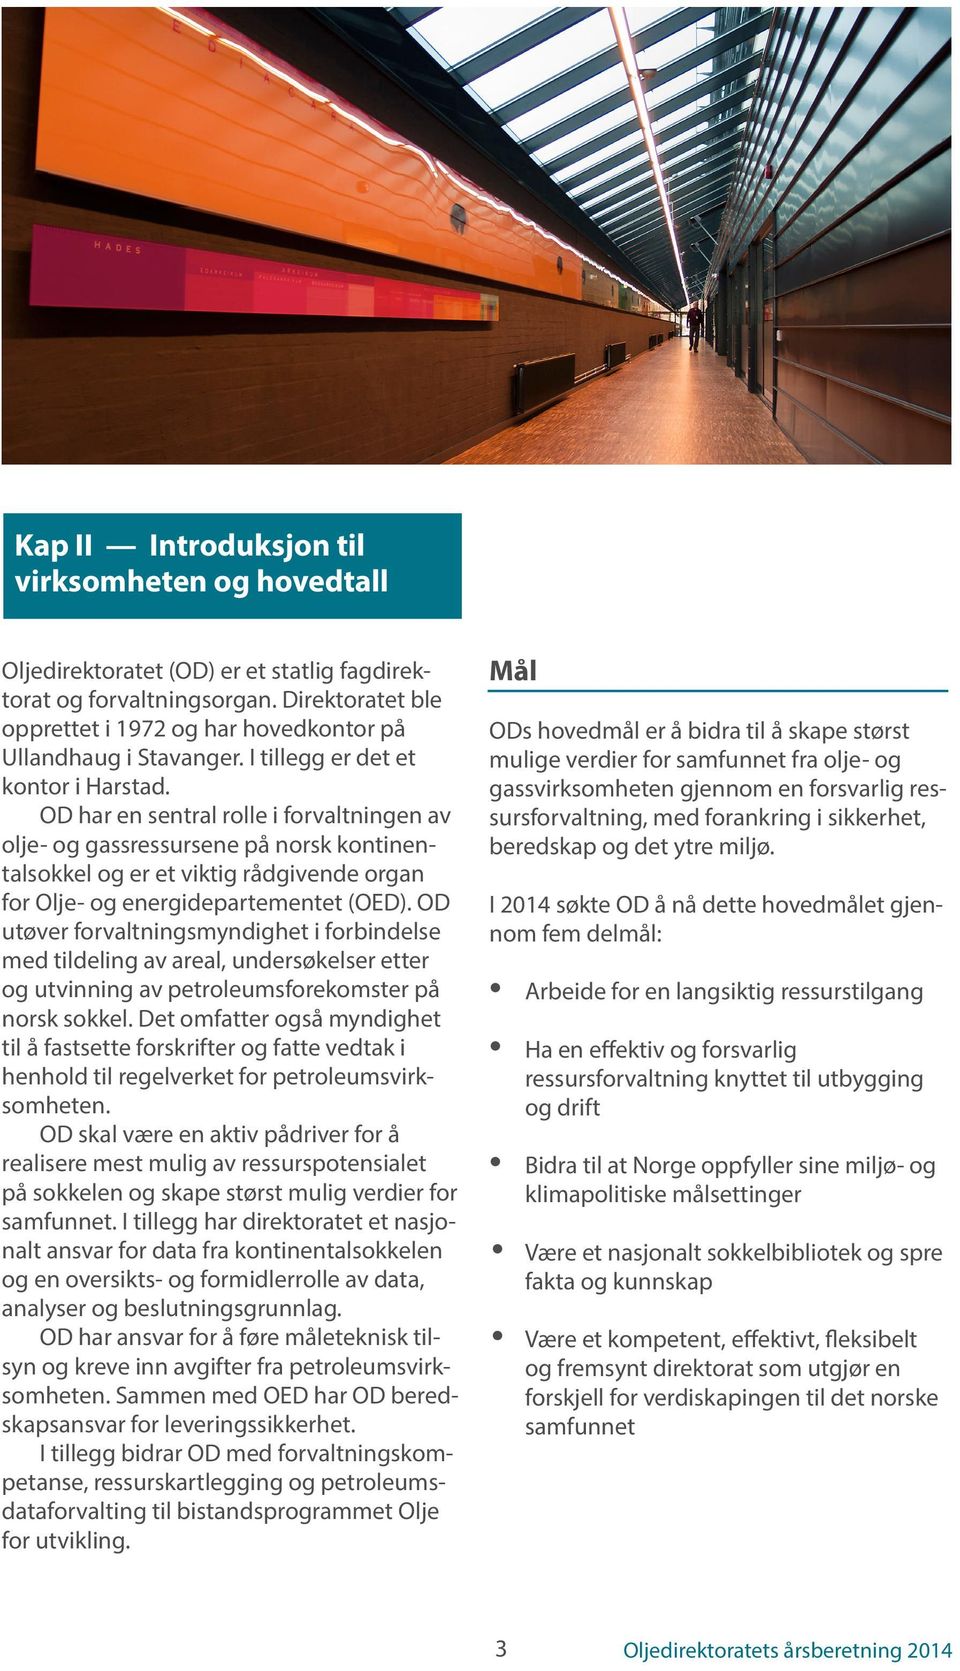 OD har en sentral rolle i forvaltningen av olje- og gassressursene på norsk kontinentalsokkel og er et viktig rådgivende organ for Olje- og energidepartementet (OED).